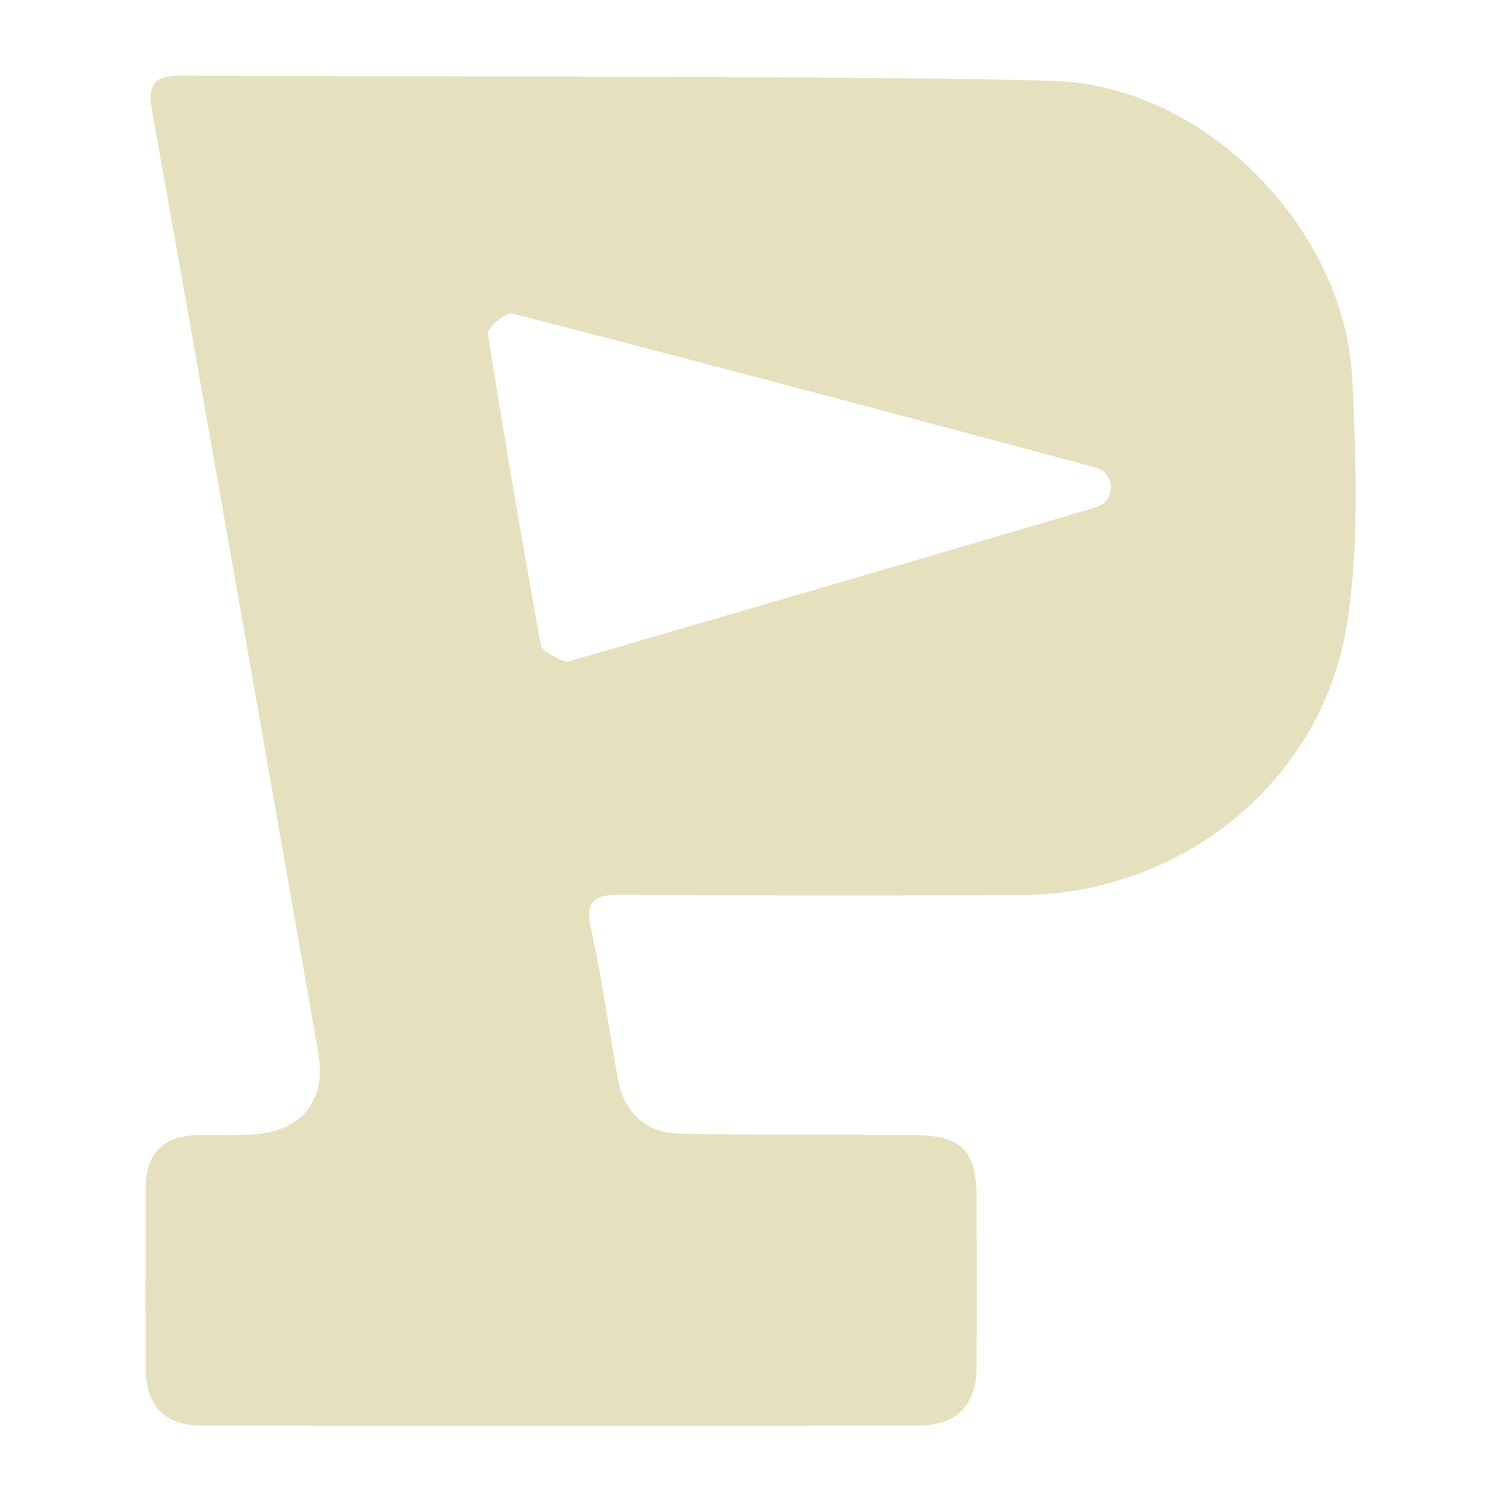 Pennant Patchworks, LLC